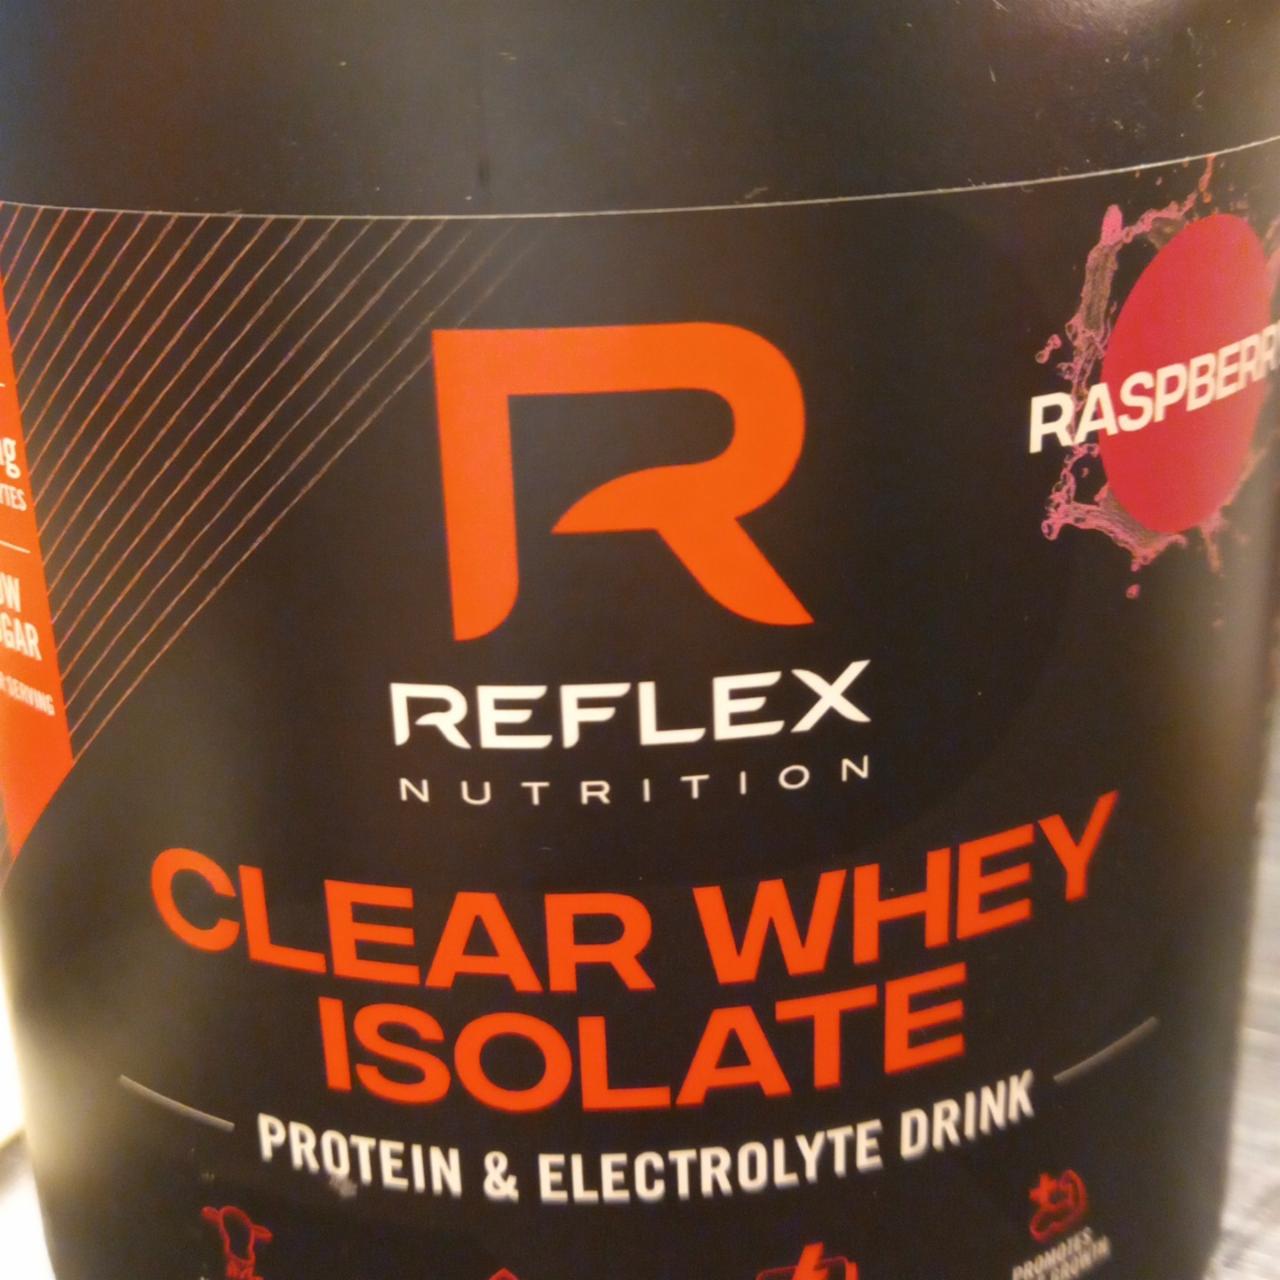 Fotografie - Clear Whey Isolate Raspberry Reflex Nutrition